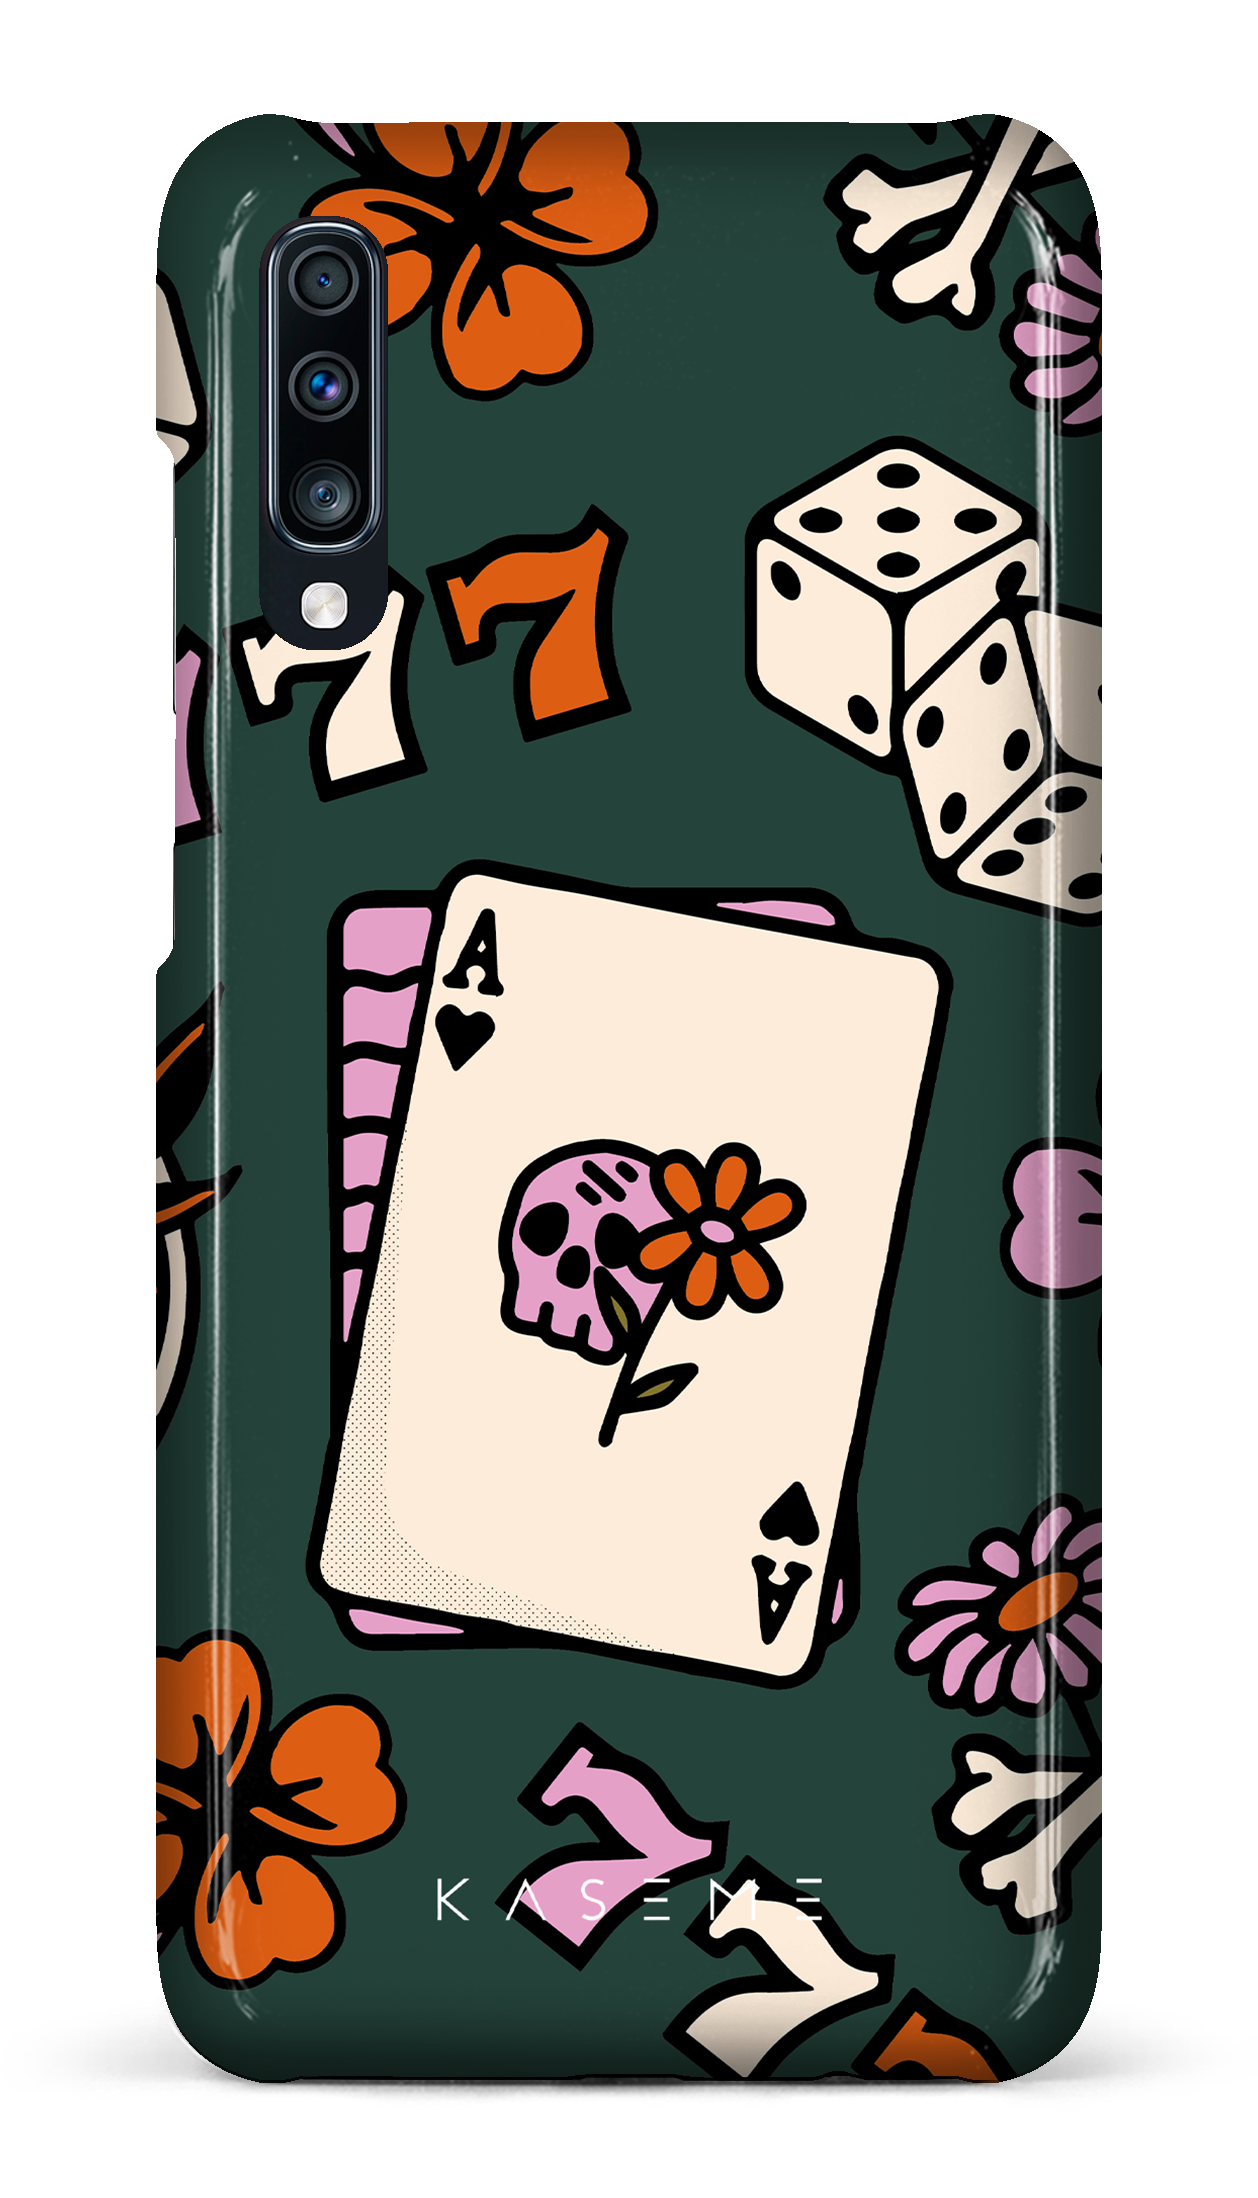 Poker Face - Galaxy A70